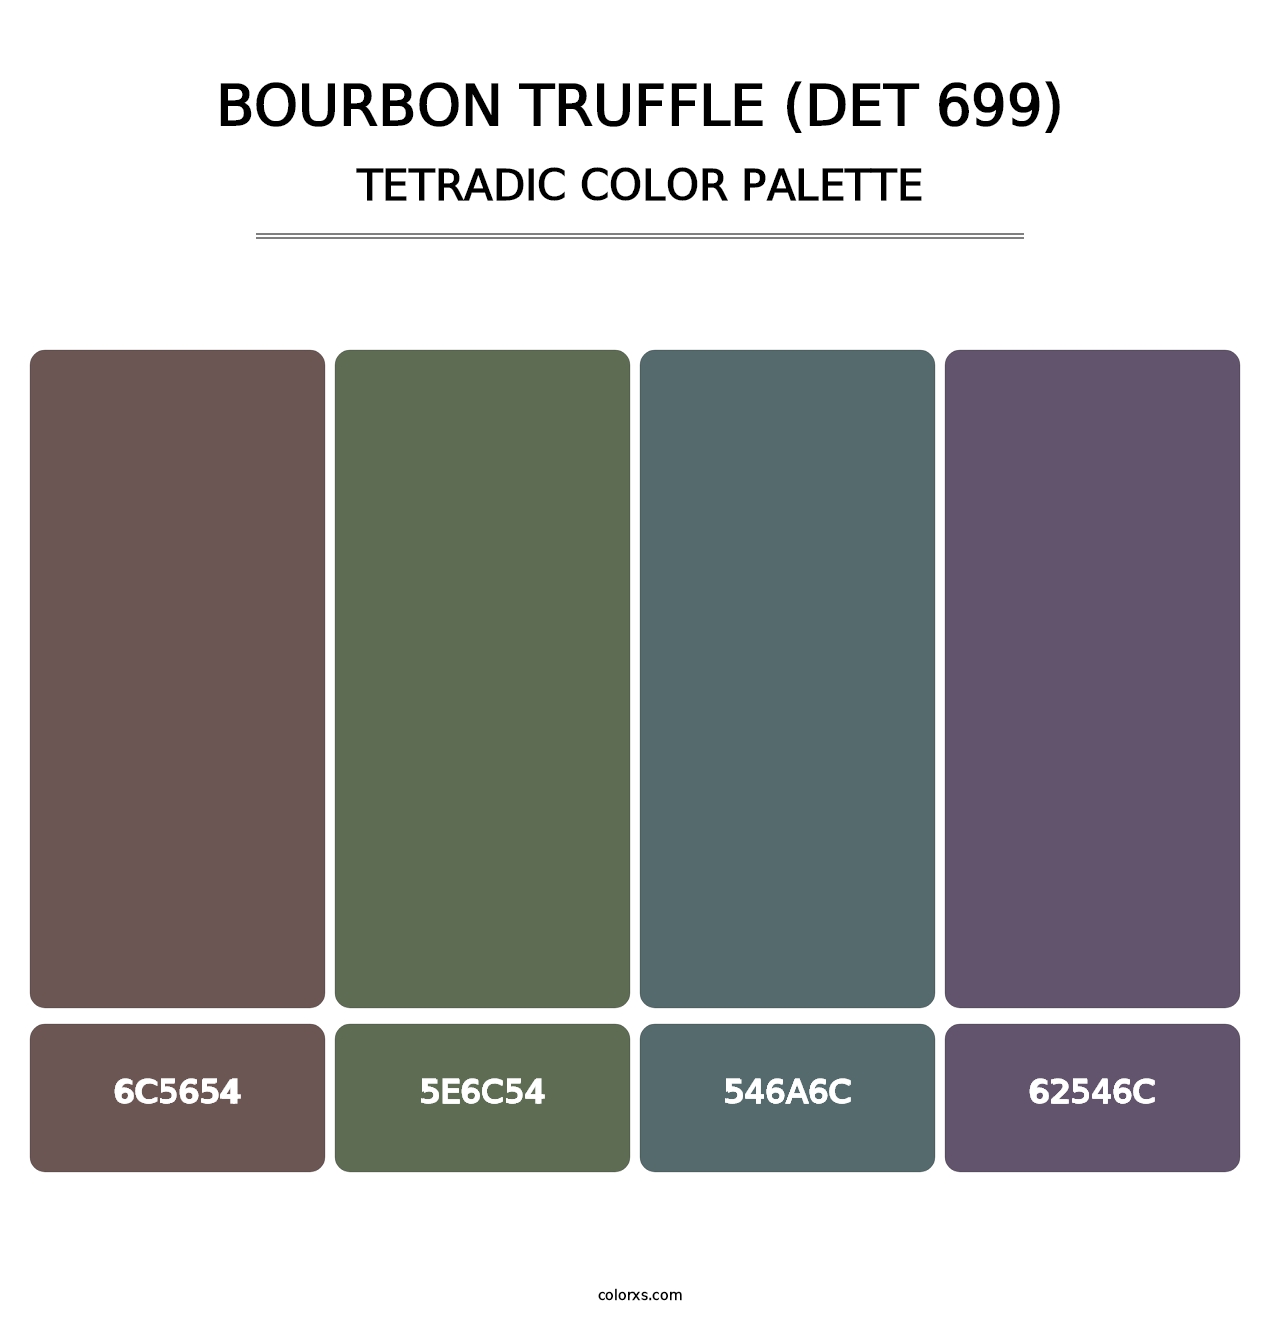 Bourbon Truffle (DET 699) - Tetradic Color Palette